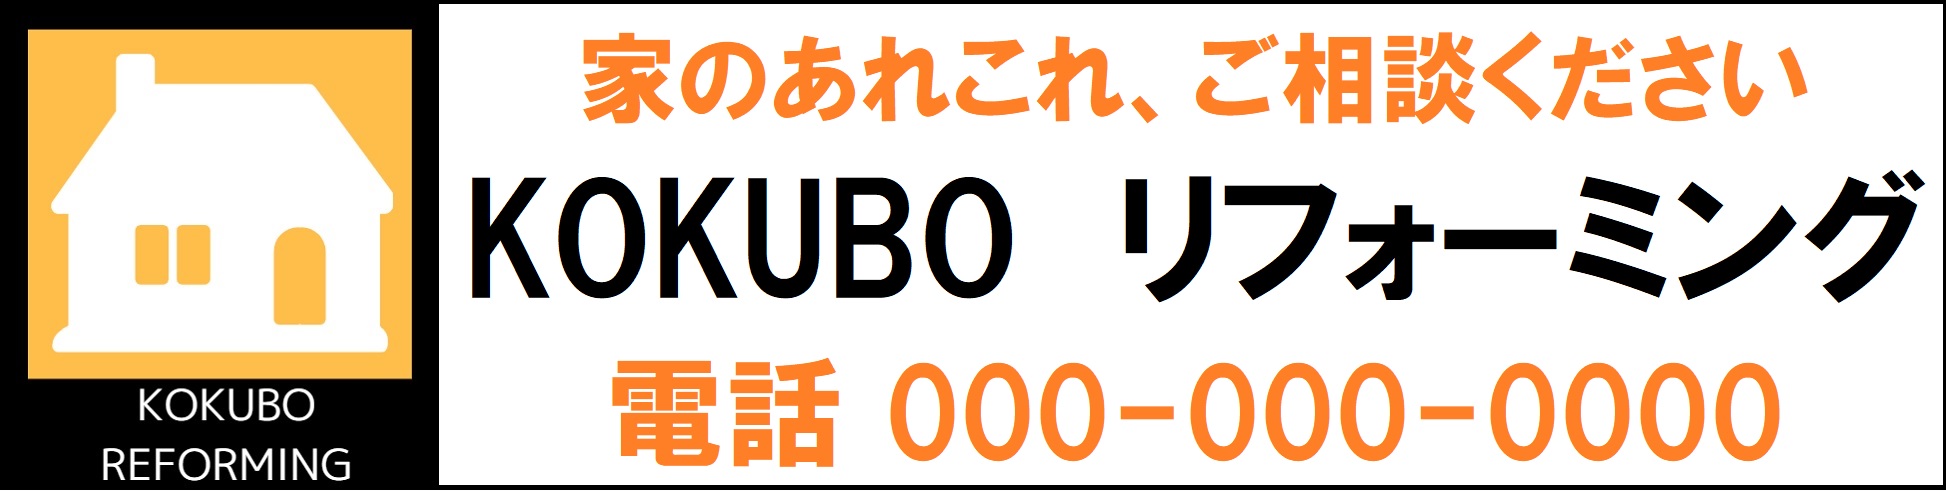 Sample03-KOKUBO リフォーミング